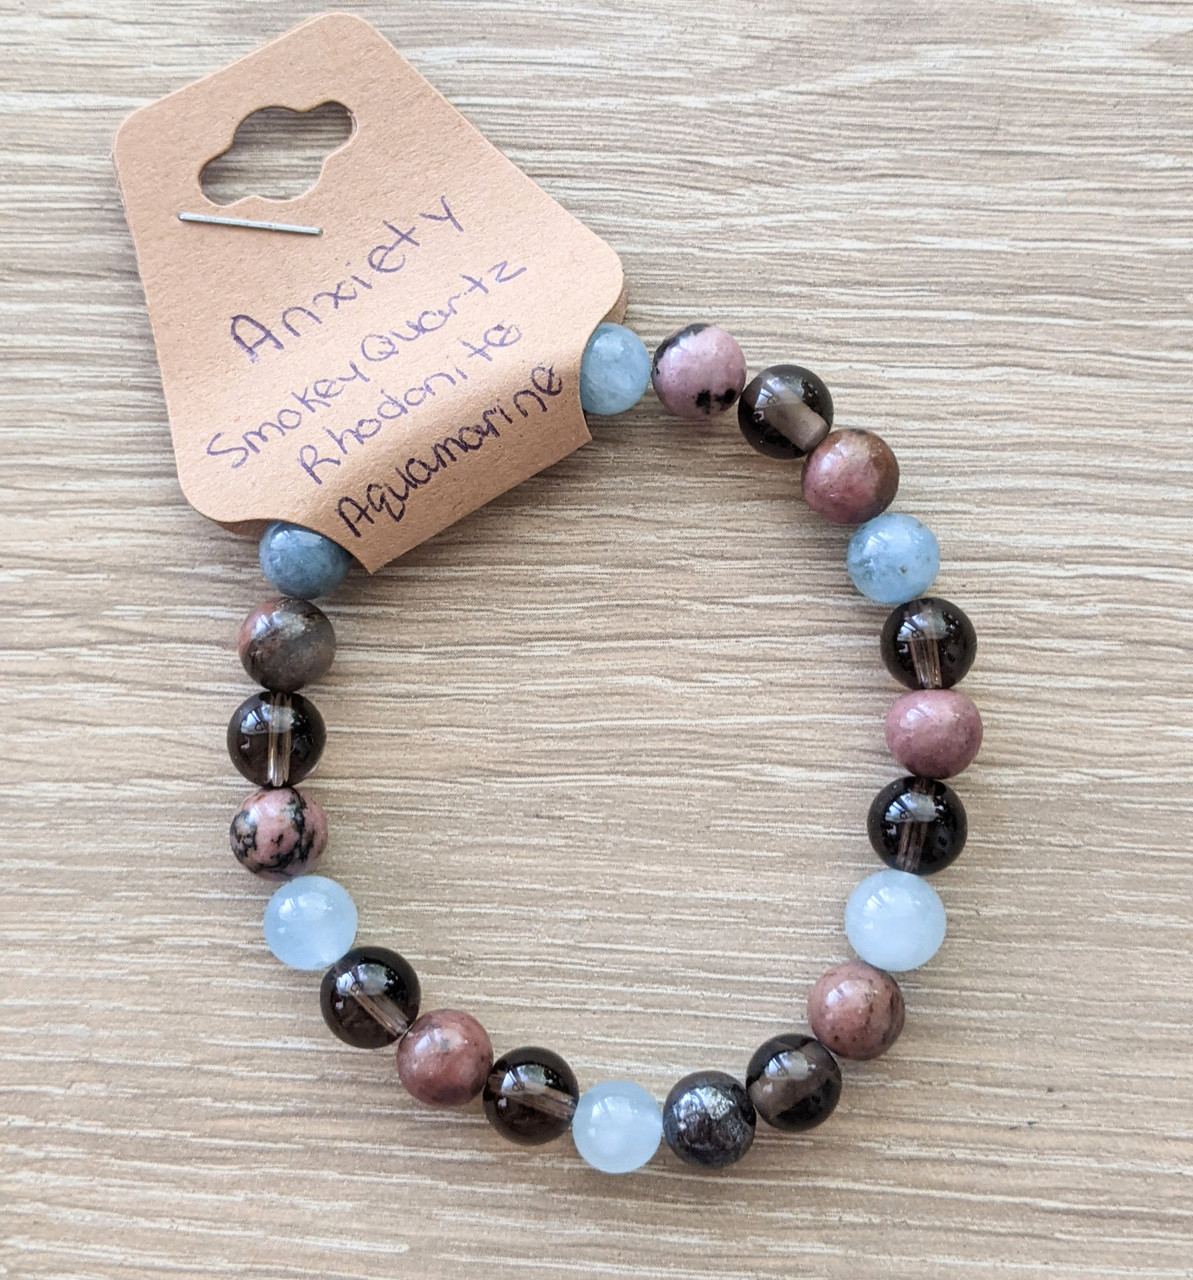 Grey Agate Charm Bracelet Gift Bag Three Ring Beads Anxiety Healing Calming  | eBay